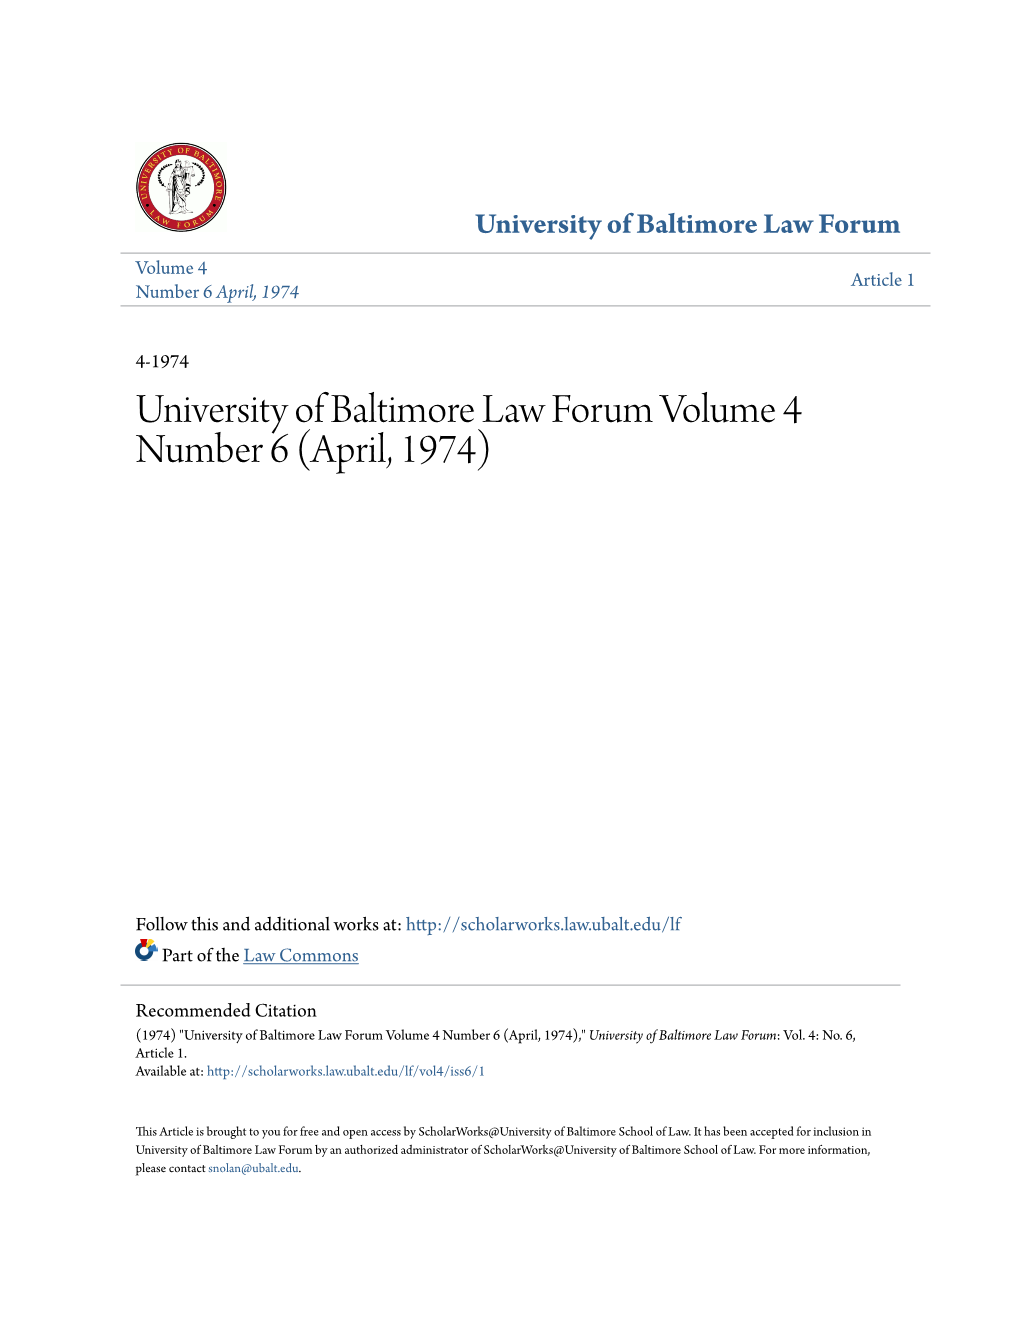 University of Baltimore Law Forum Volume 4 Number 6 (April, 1974)